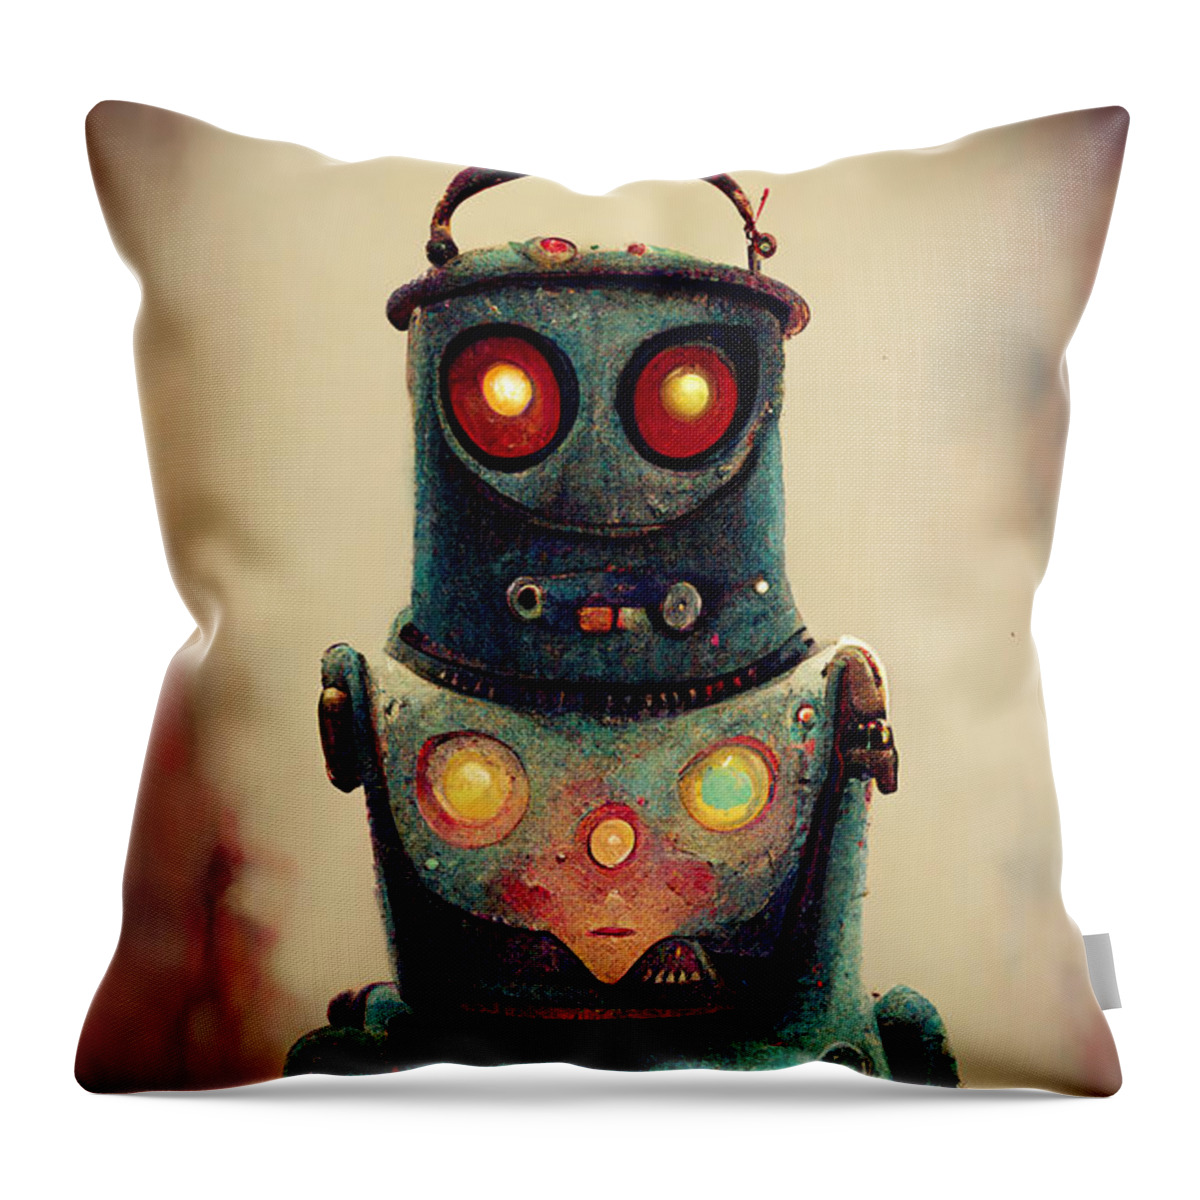 Robot Throw Pillow featuring the digital art Robot granny #3 by Sabantha